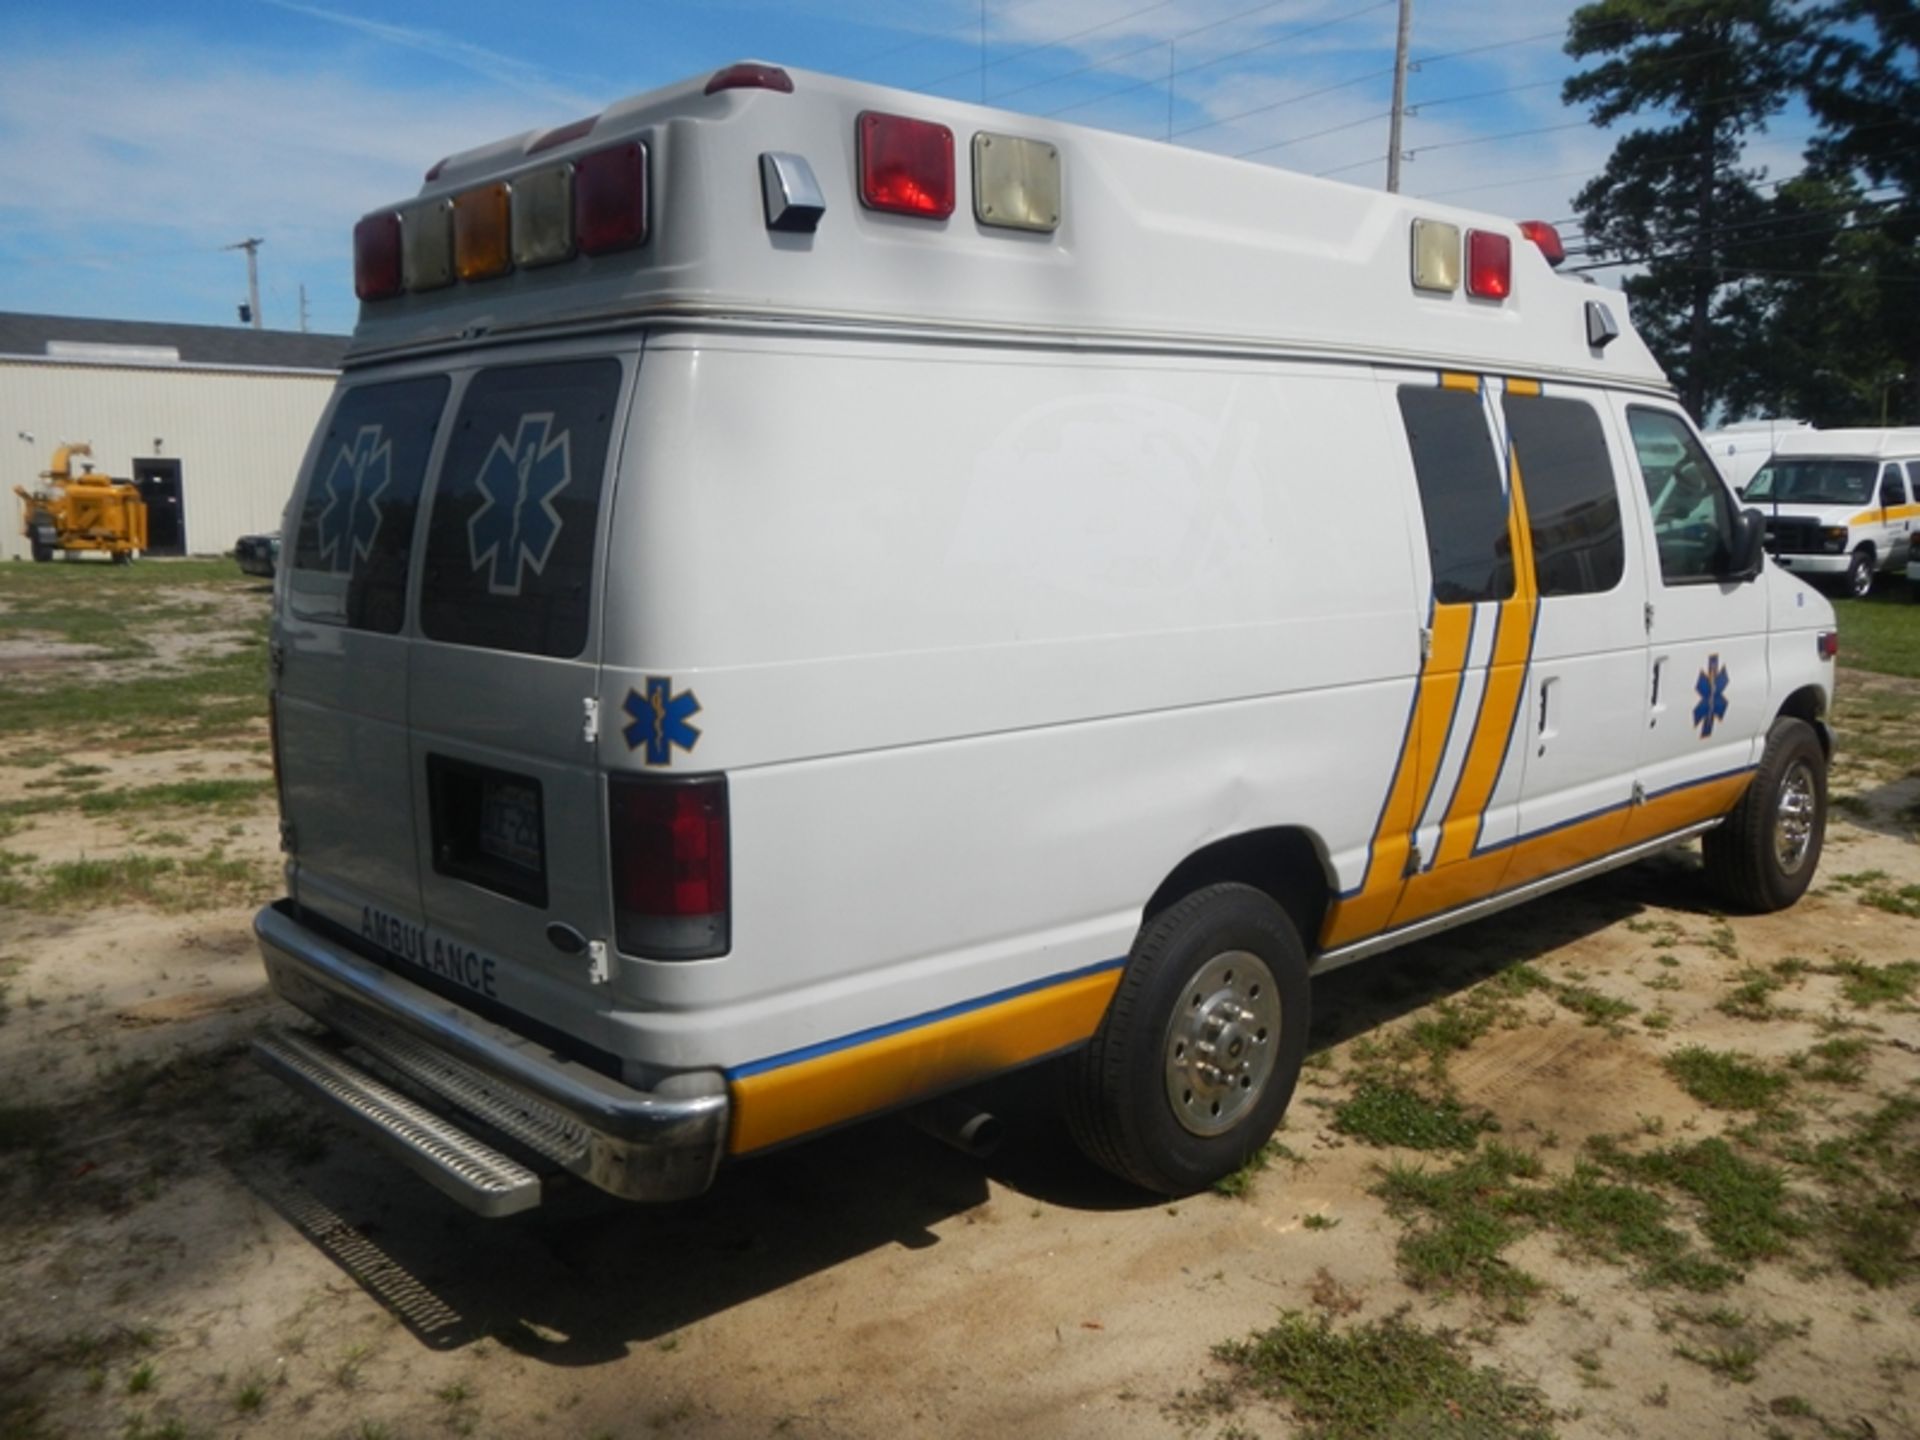 2001 FORD E-350 Super Duty Type II Ambulance, 7.3 diesel - 248,021 miles - 1FDSS34F51HA84186 - Image 4 of 6